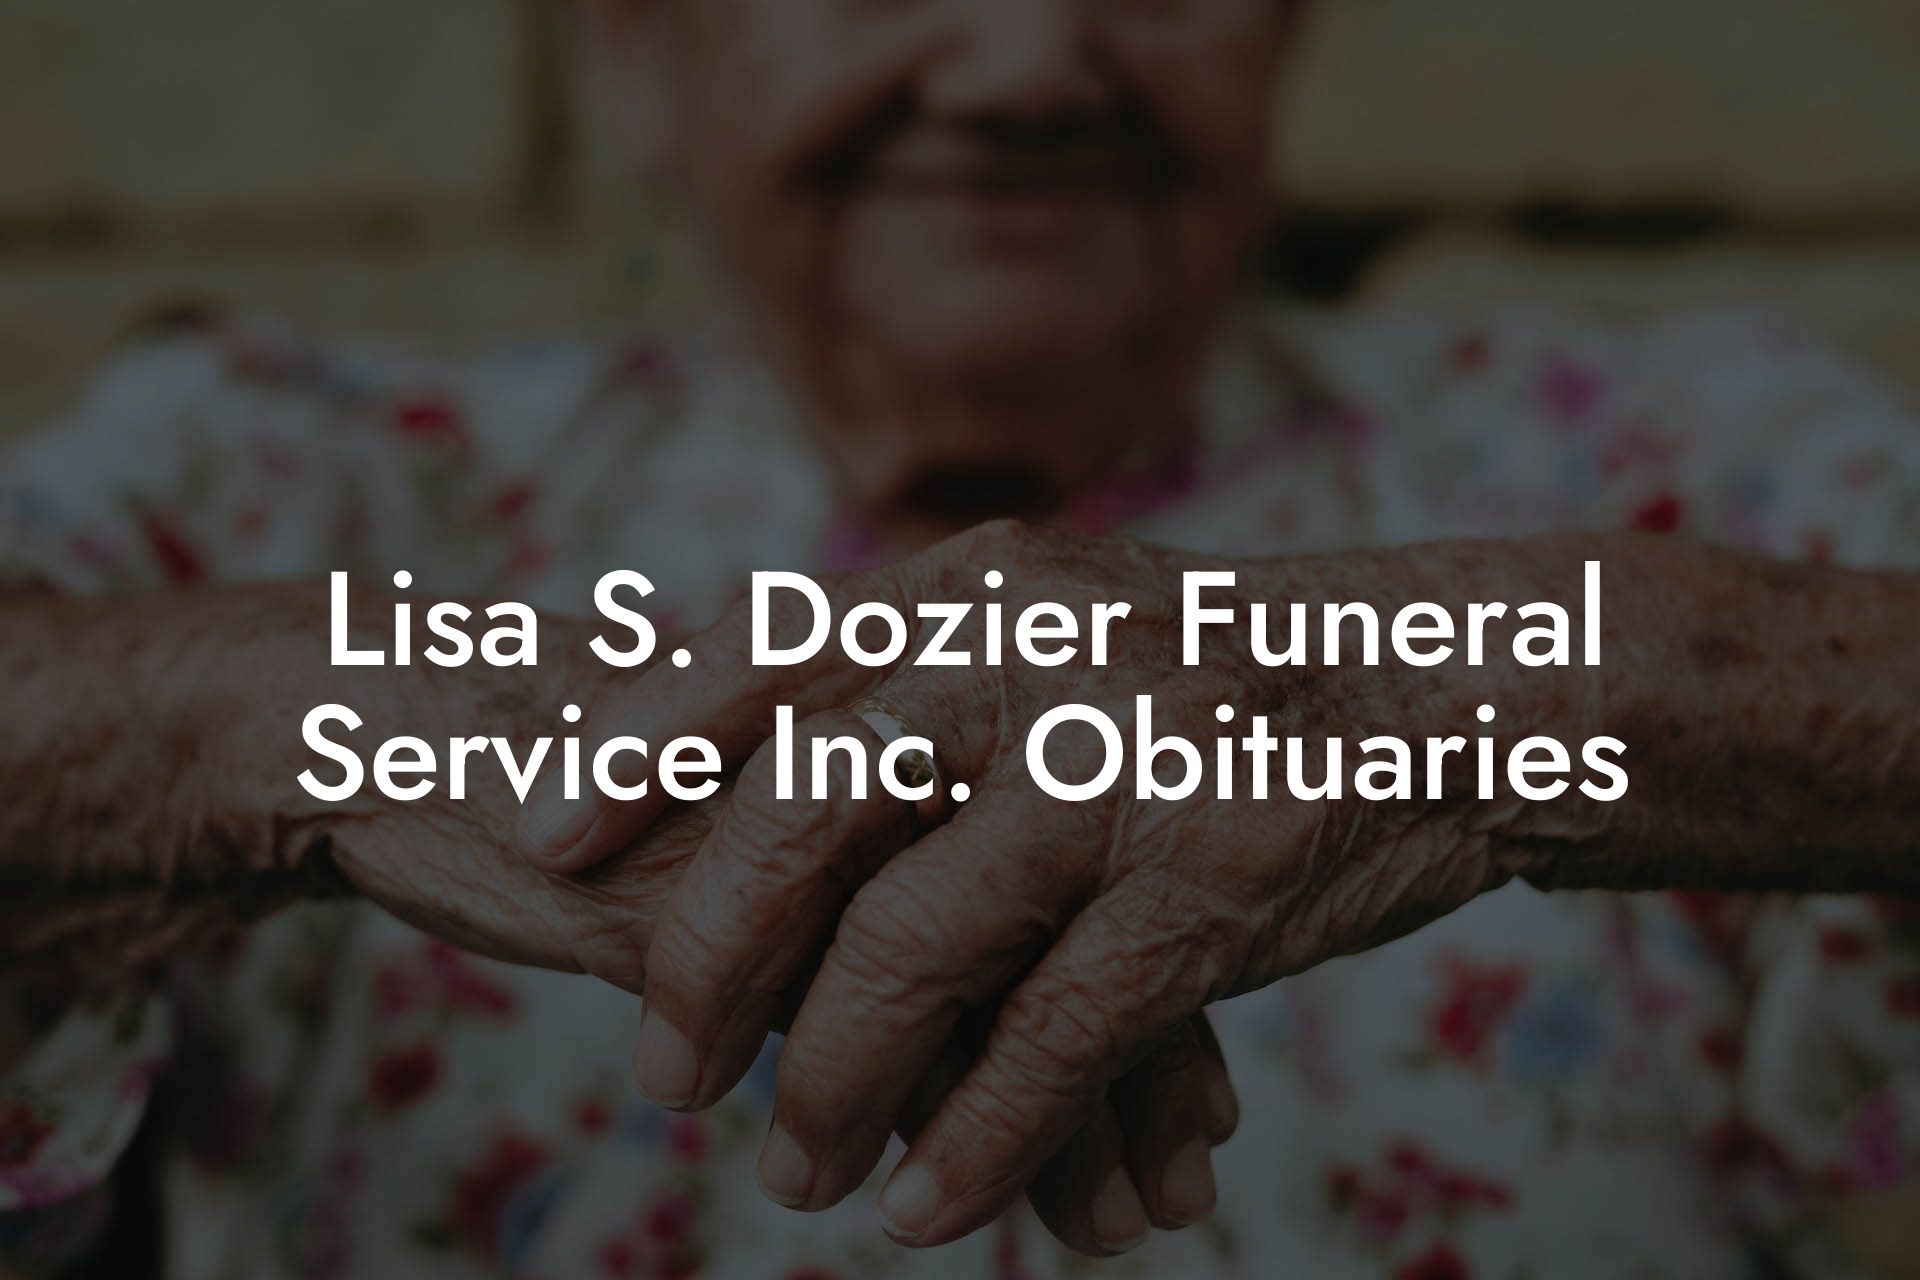 Lisa S. Dozier Funeral Service Inc. Obituaries